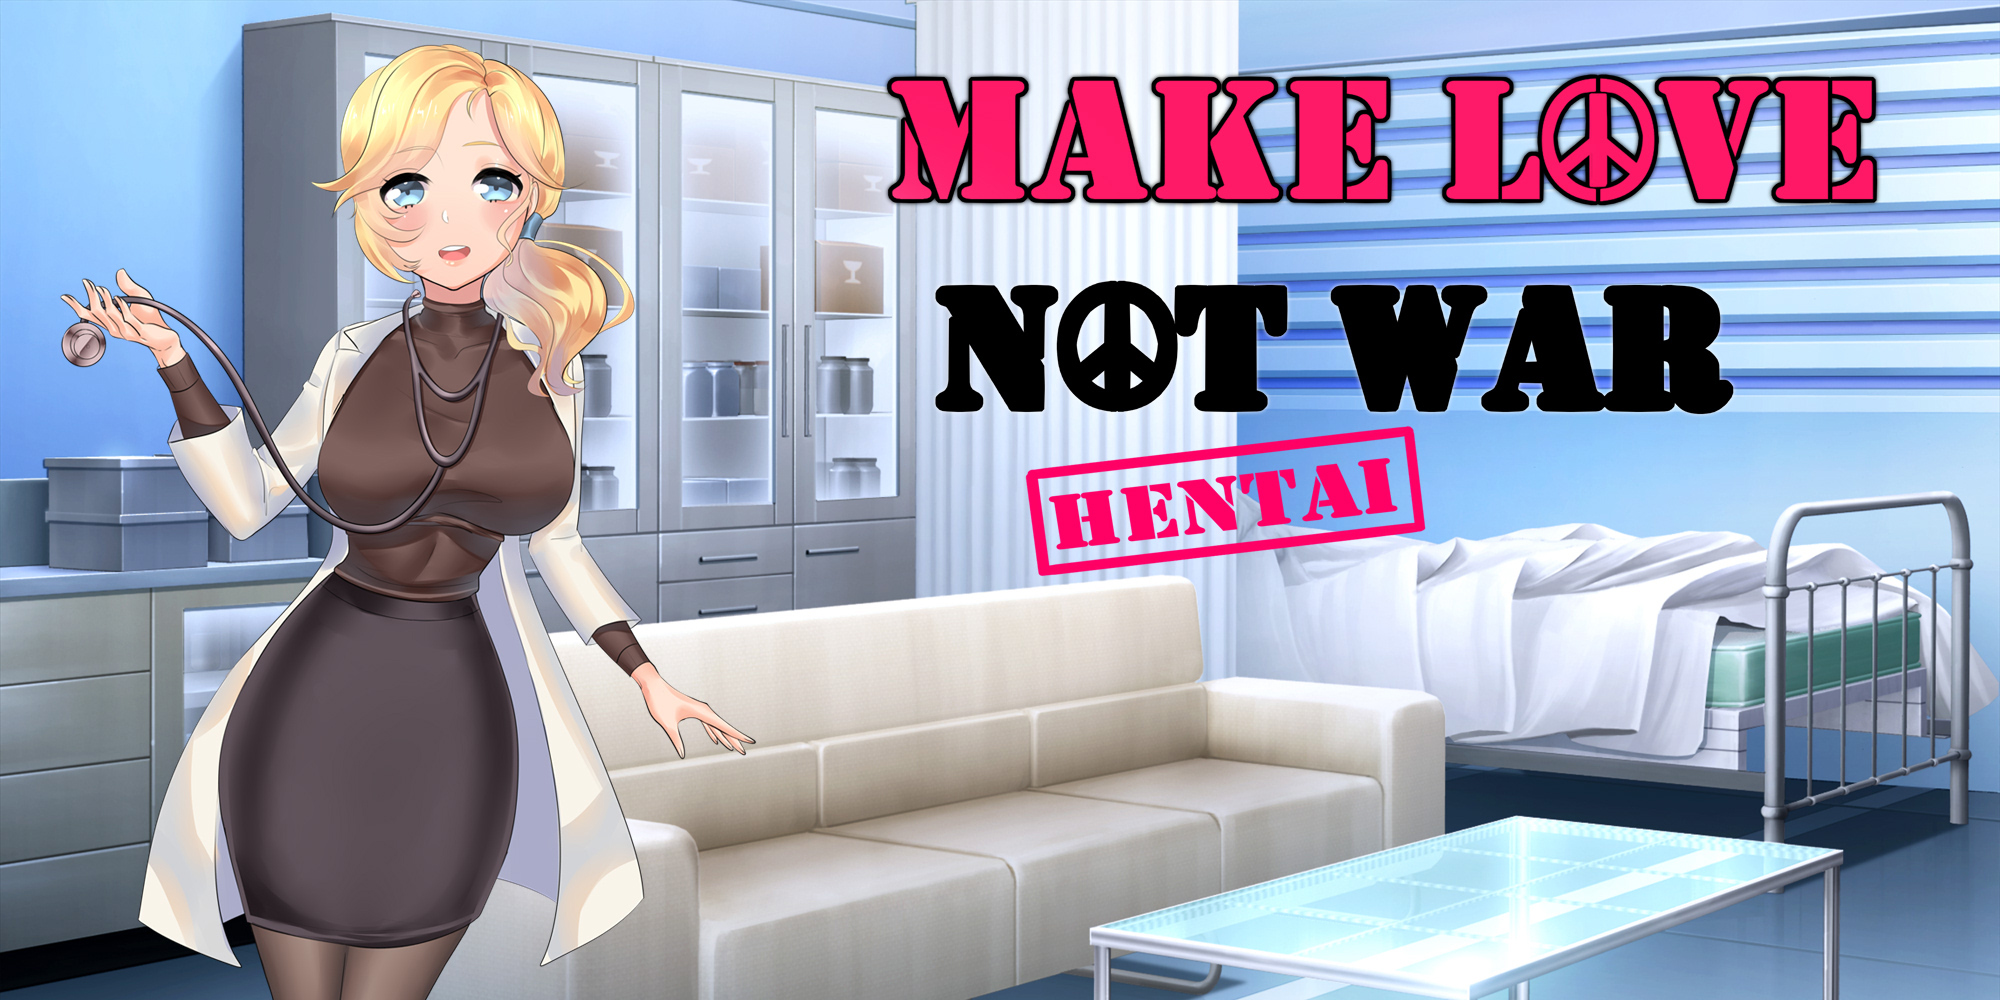 Make love not war hentai game